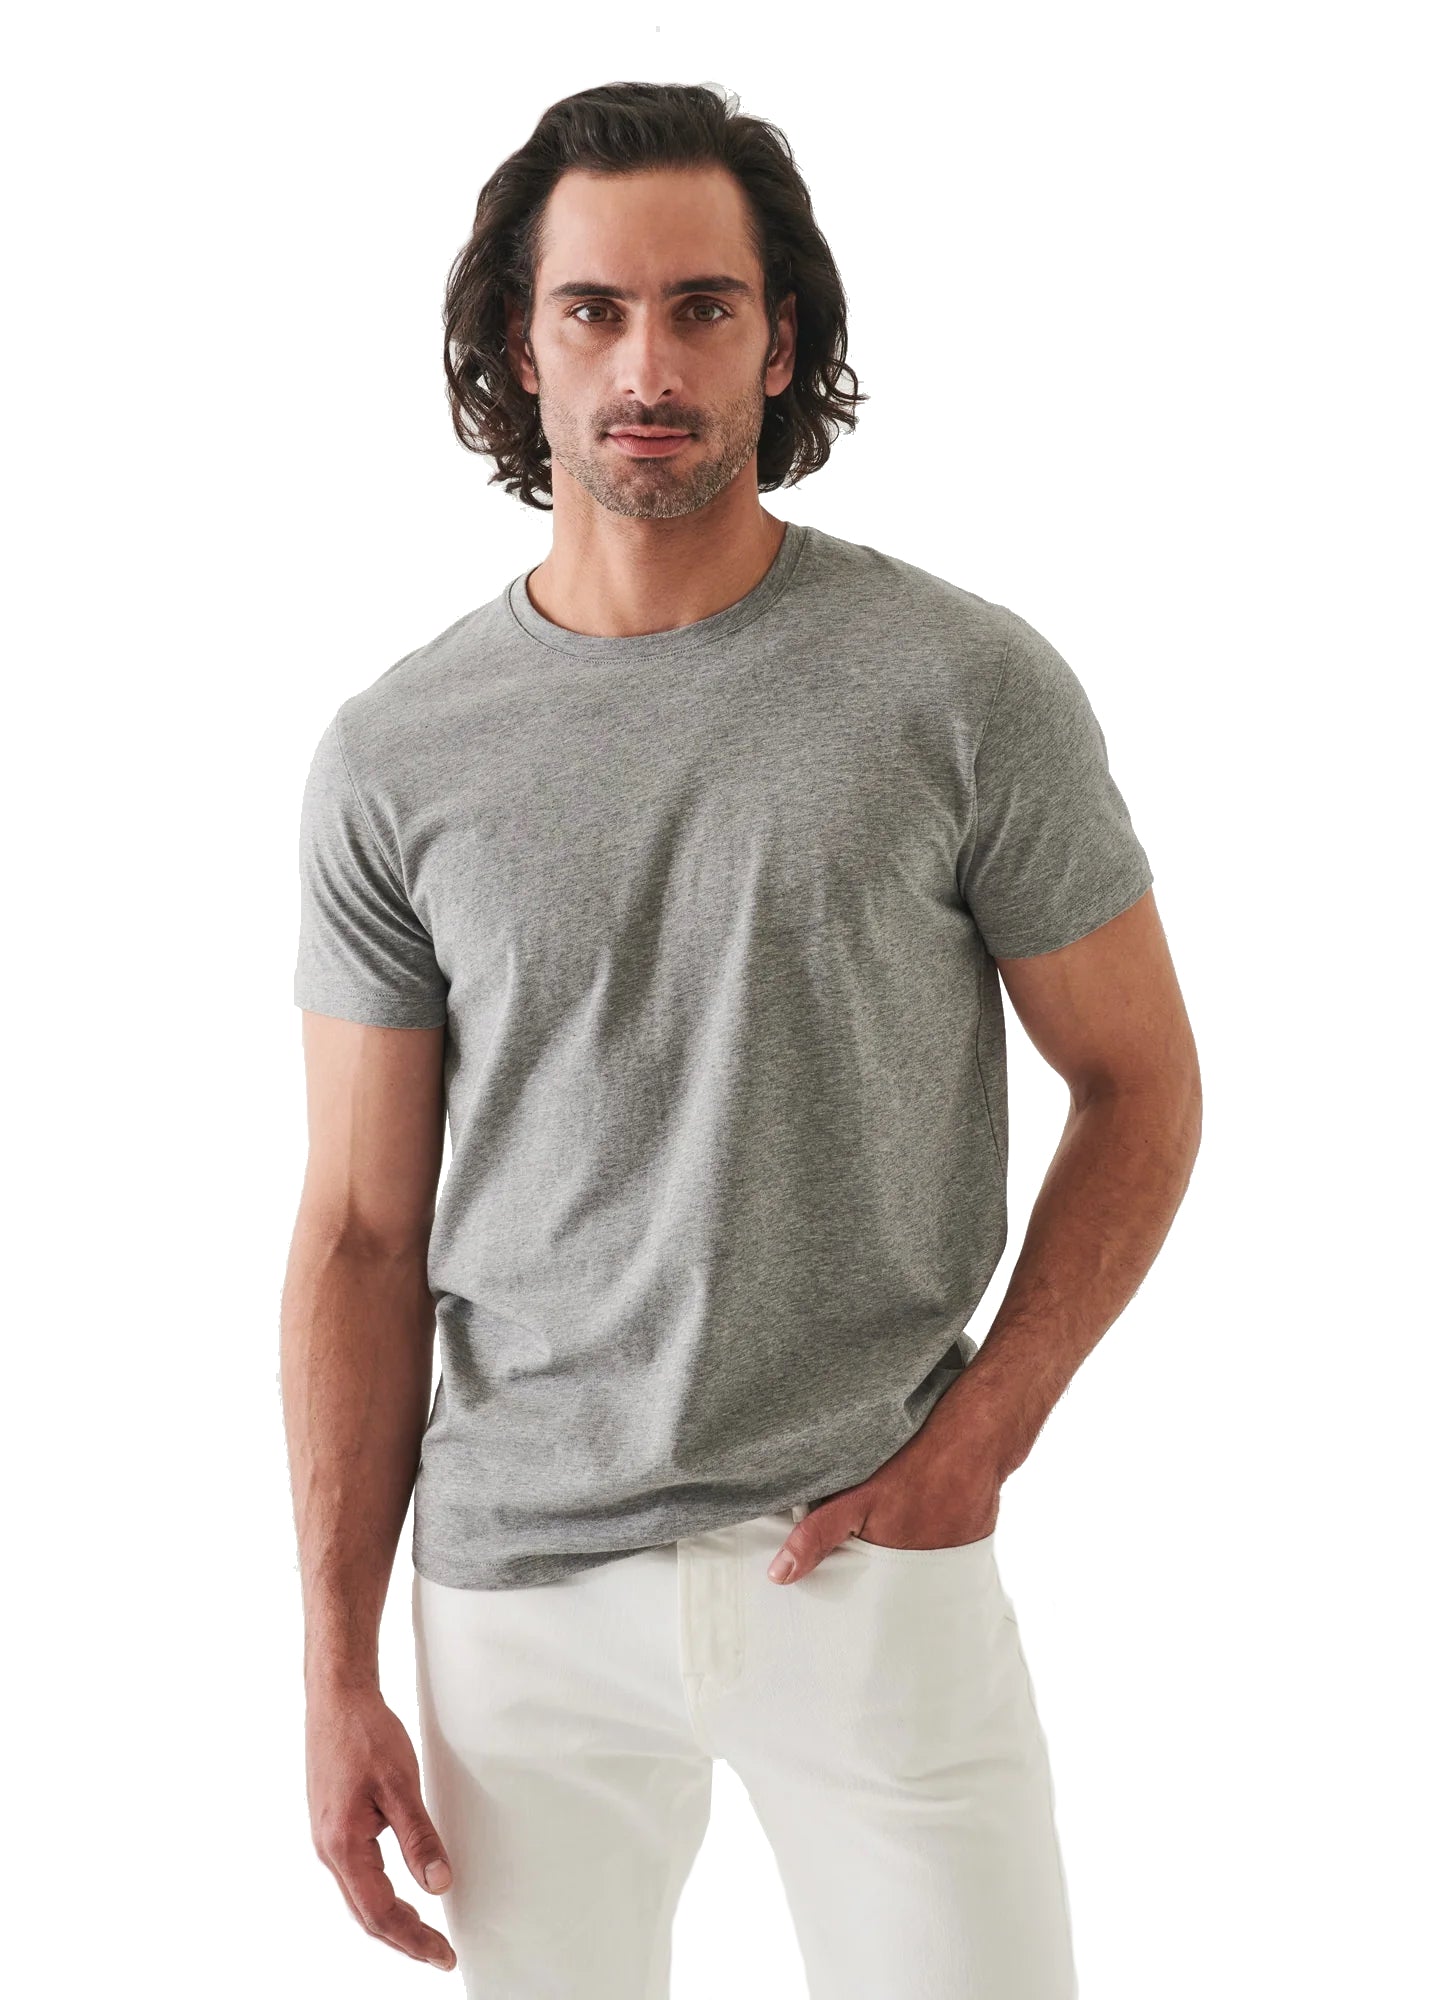 Patrick Assaraf Peruvian Pima Cotton Short Sleeve Crew Neck T-Shirt